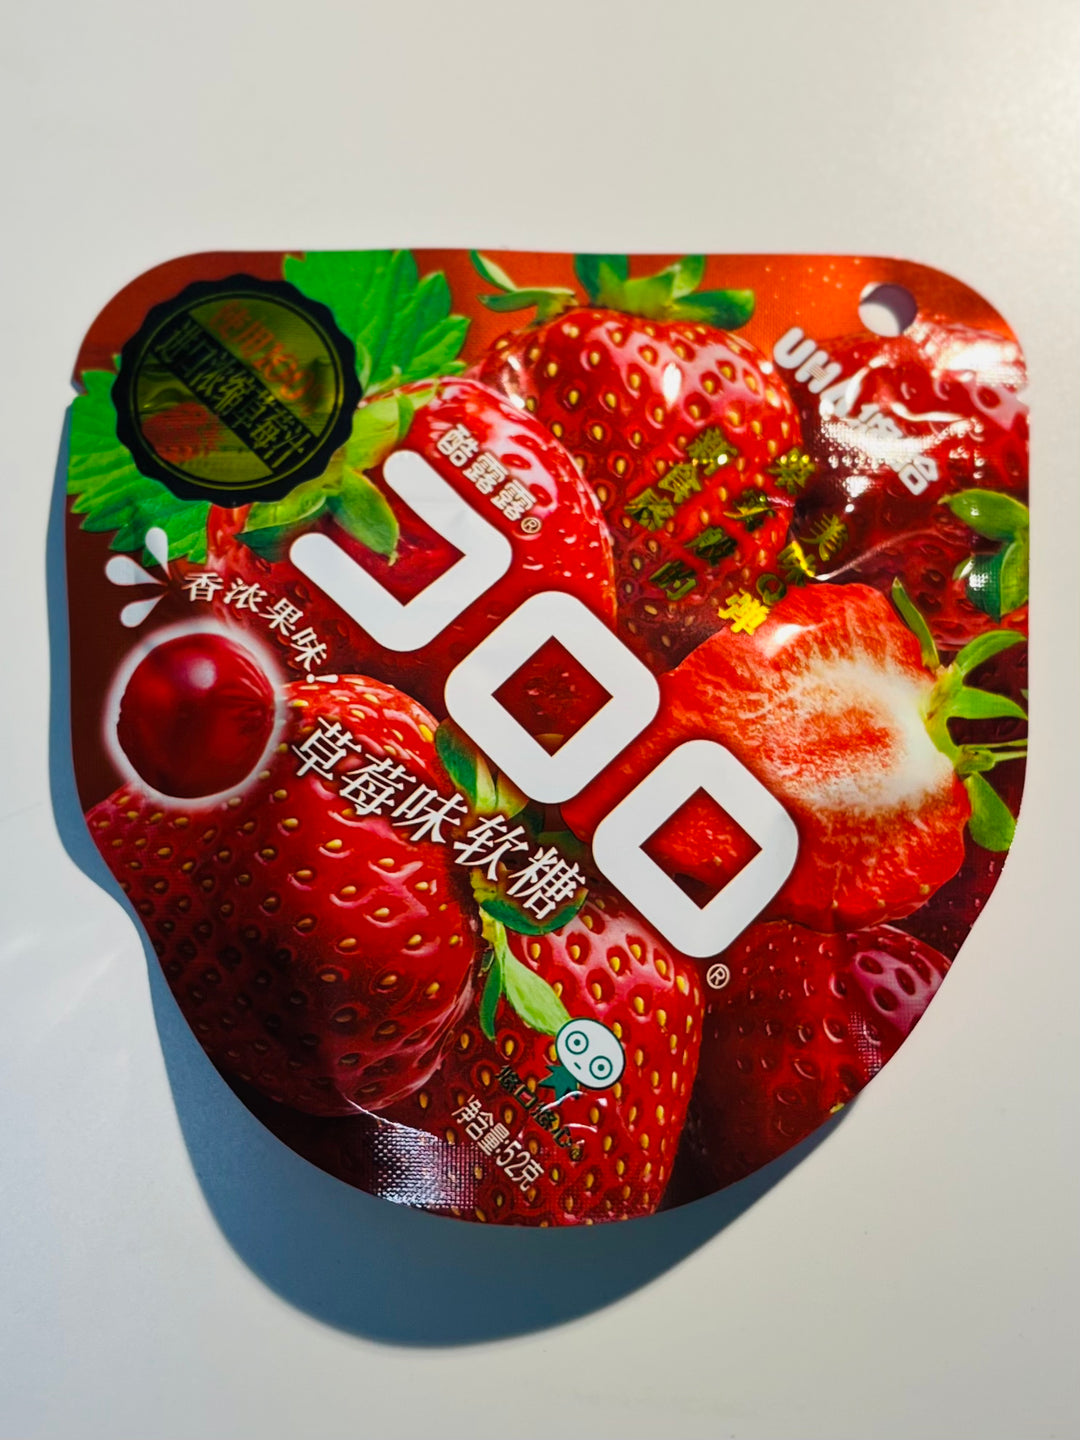 悠哈酷露露软糖草莓味52g UHA Kororo Soft Candy Strawberry Flavour